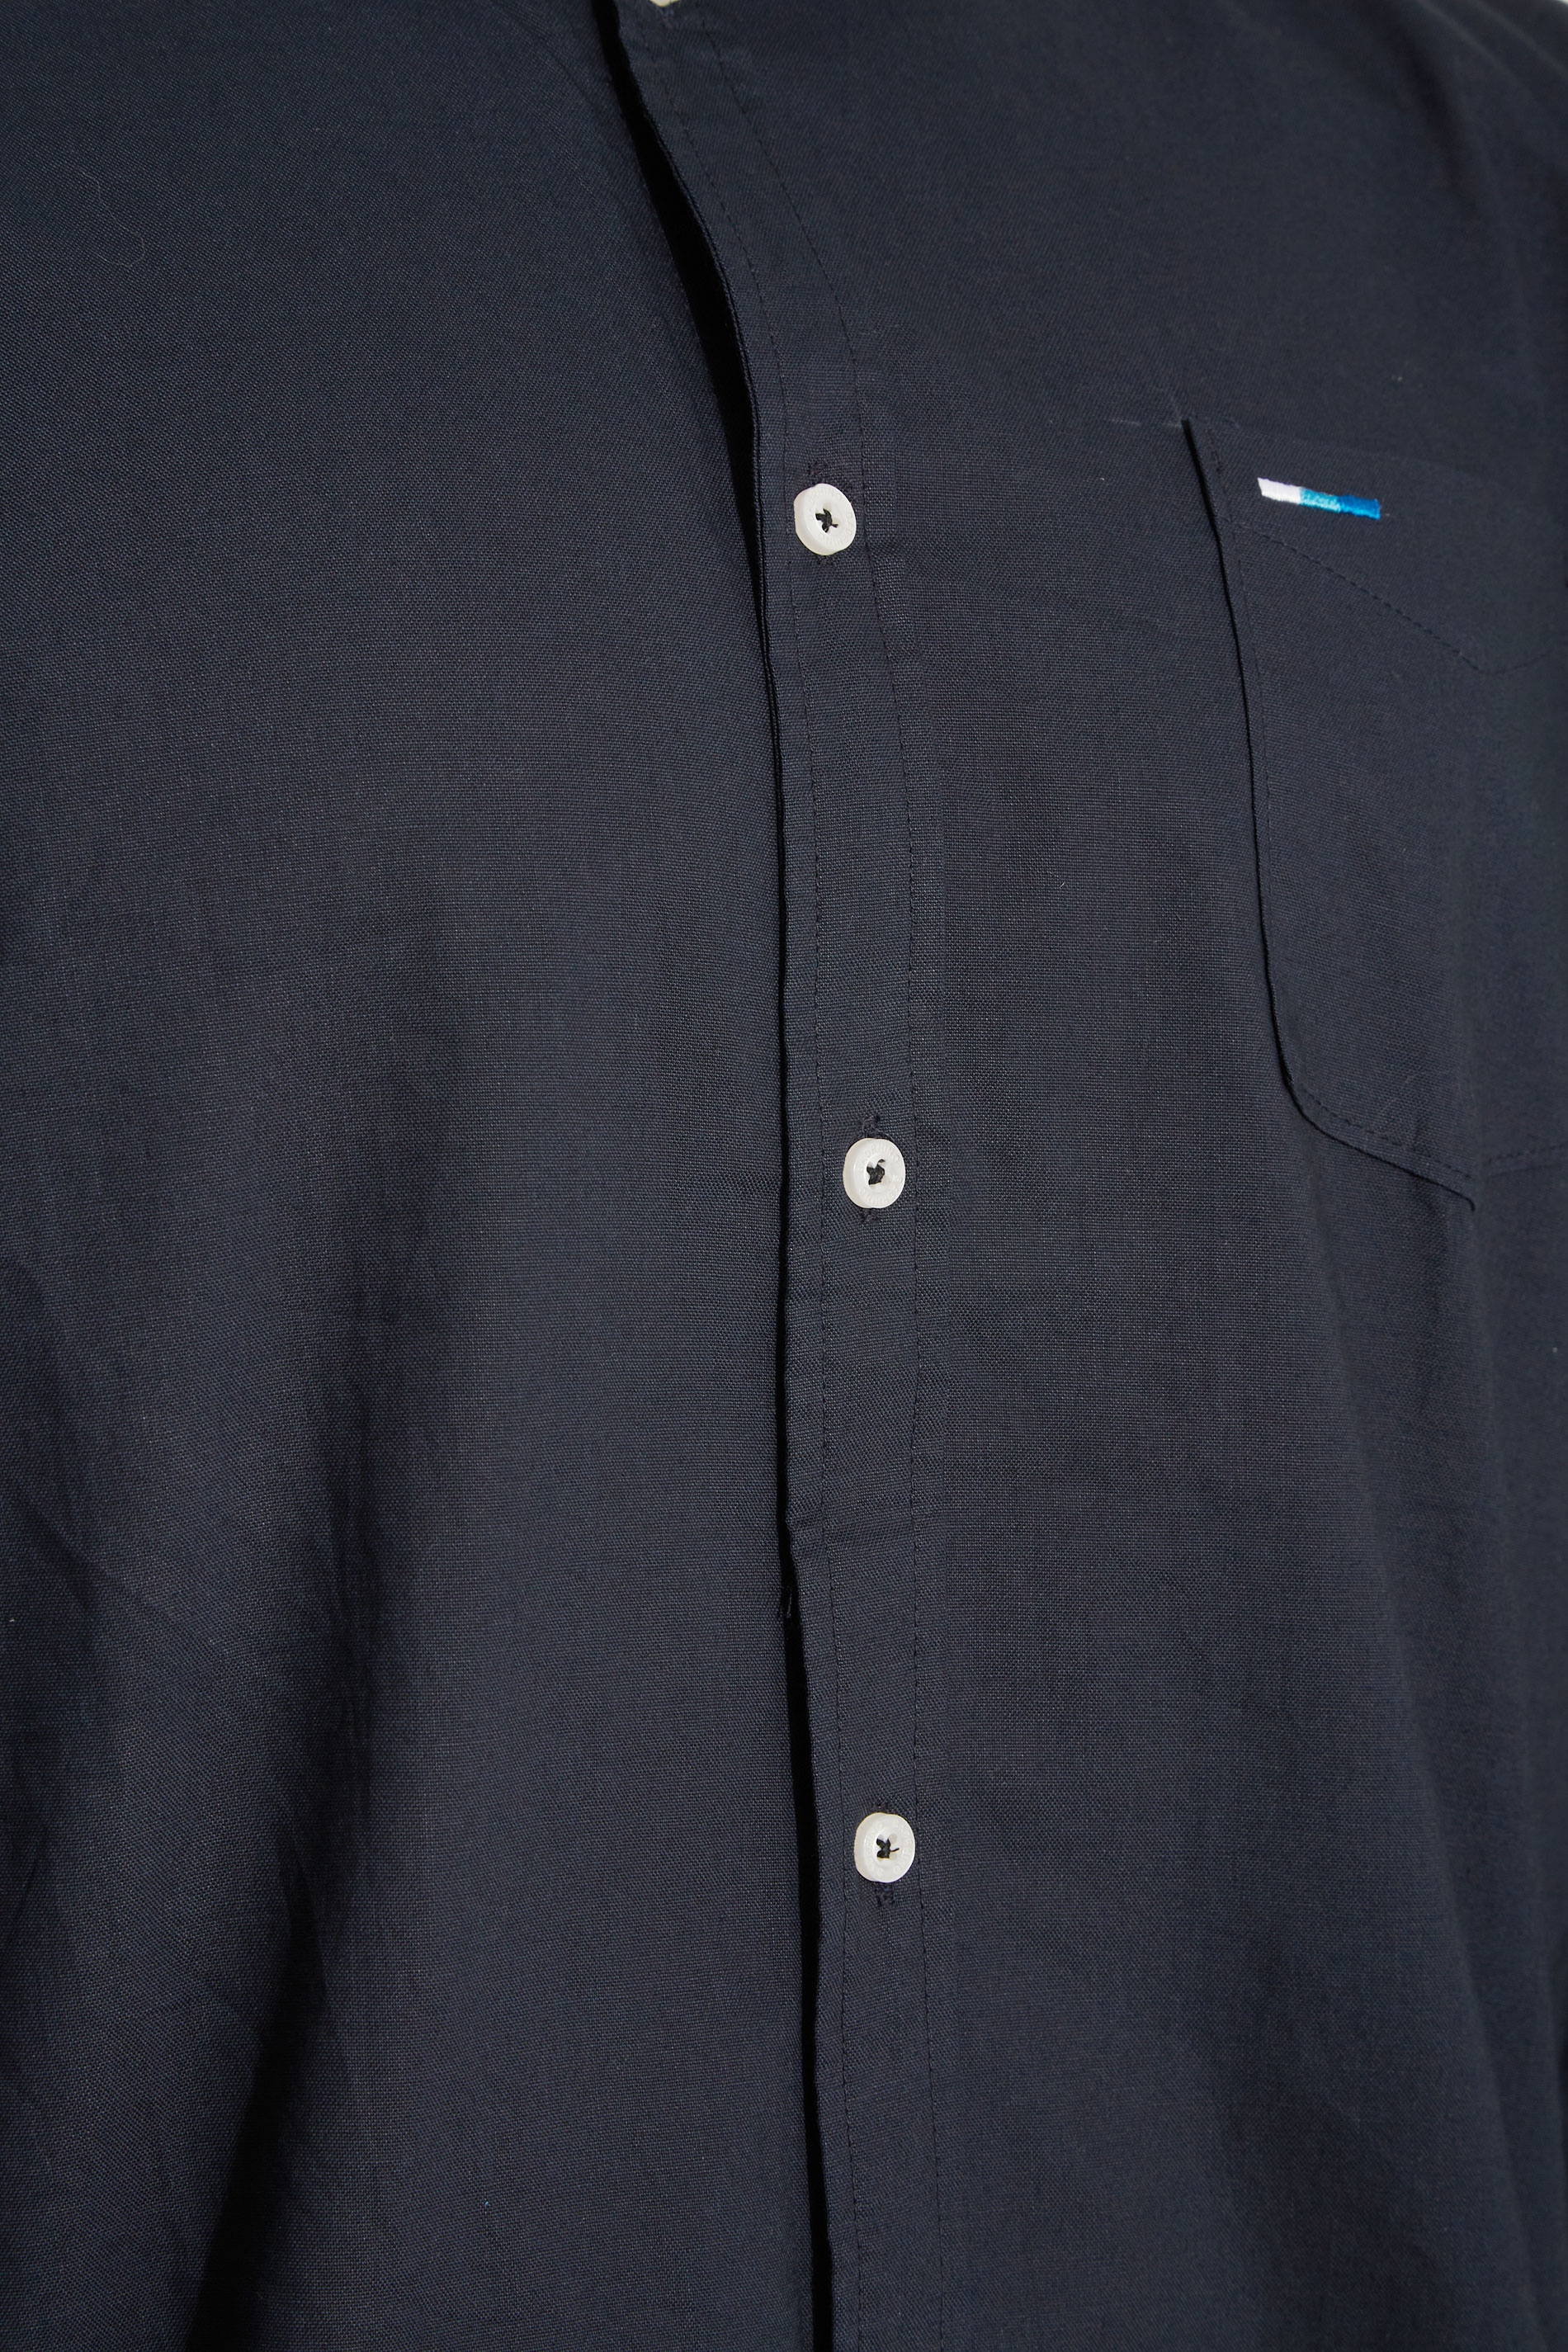 BadRhino Navy Blue Essential Long Sleeve Oxford Shirt | BadRhino 2